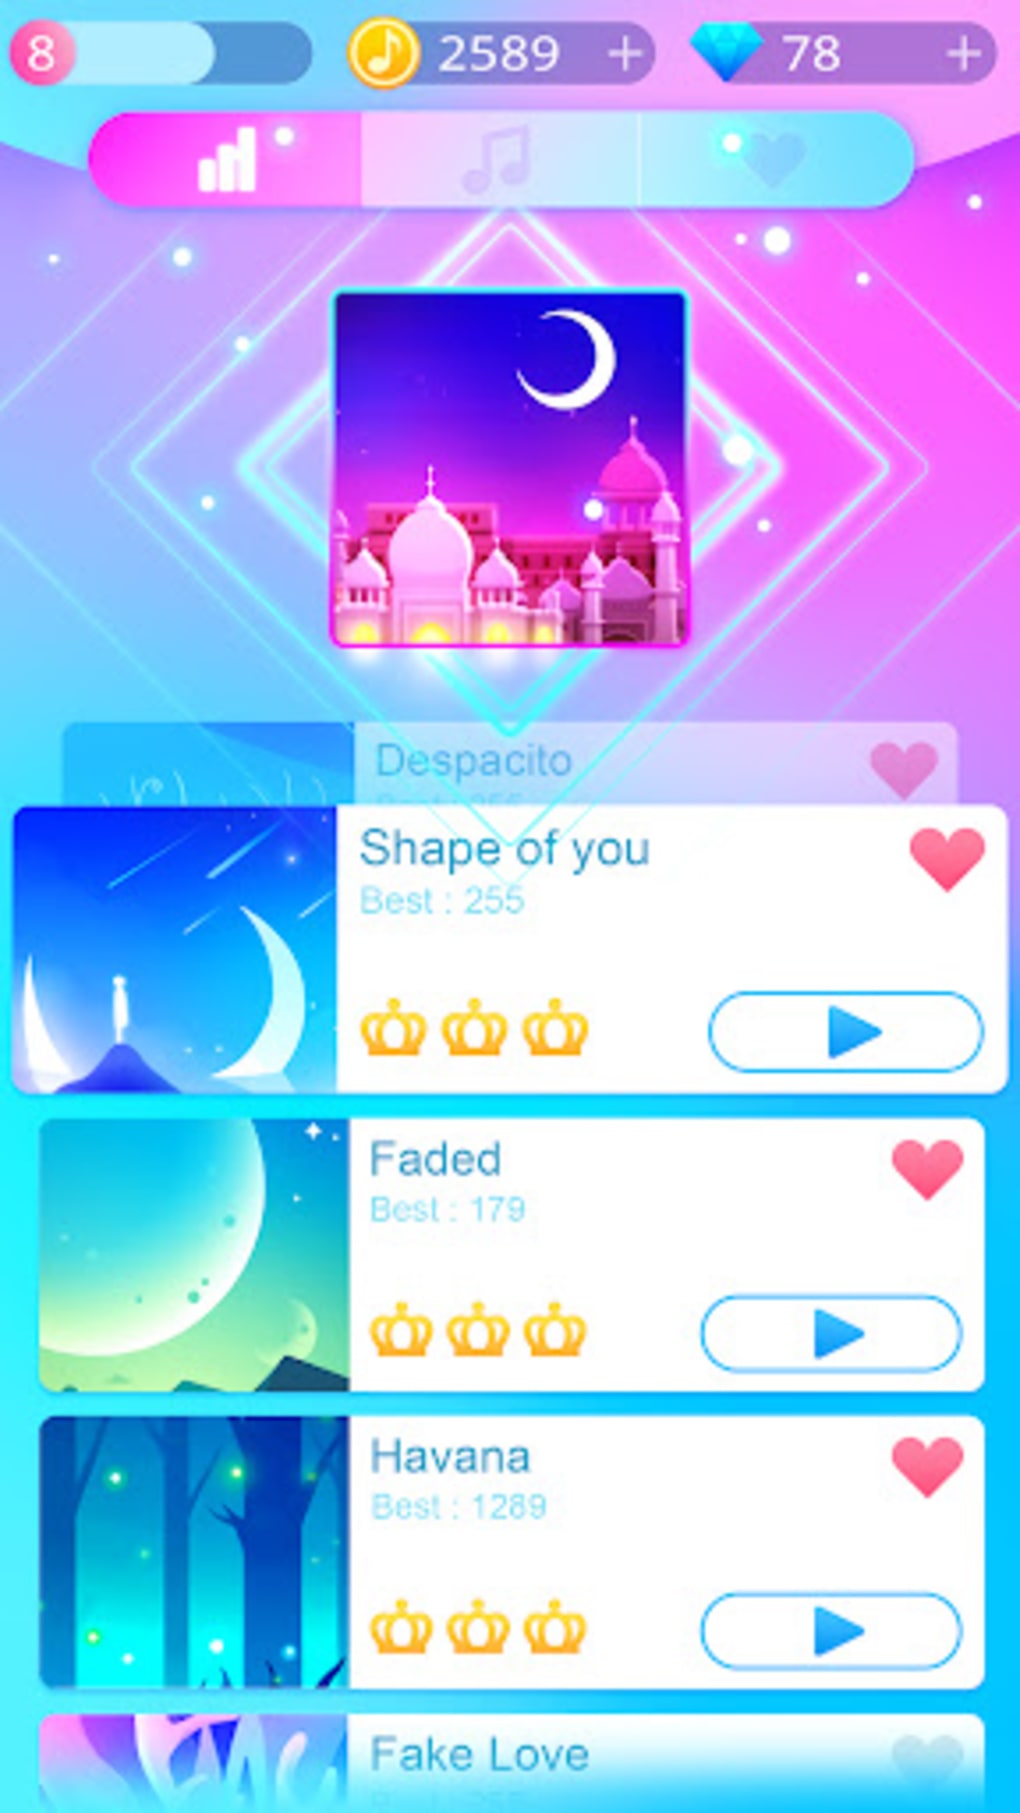 Download do APK de Music Piano: Cool EDM Tiles para Android